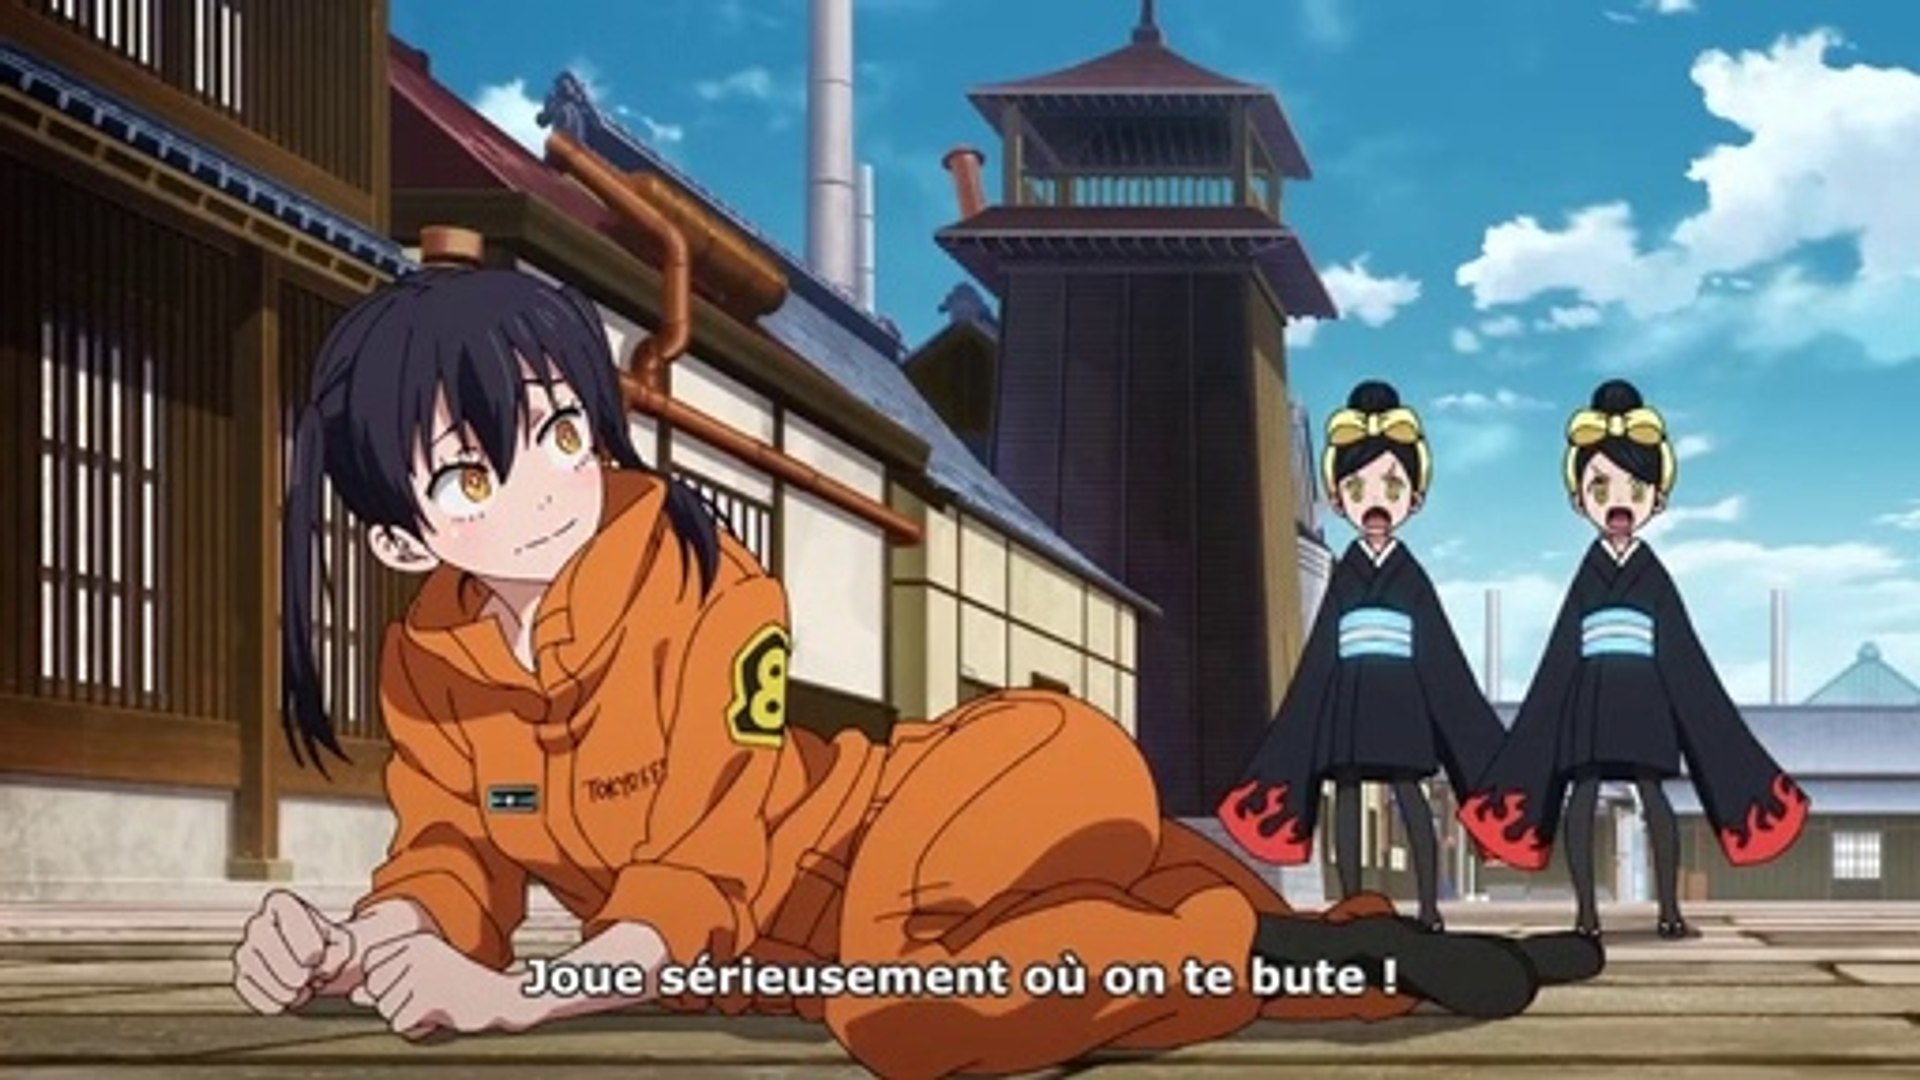 Fire Force 3 Temporada-Enen no Shouboutai season 3 Anime 